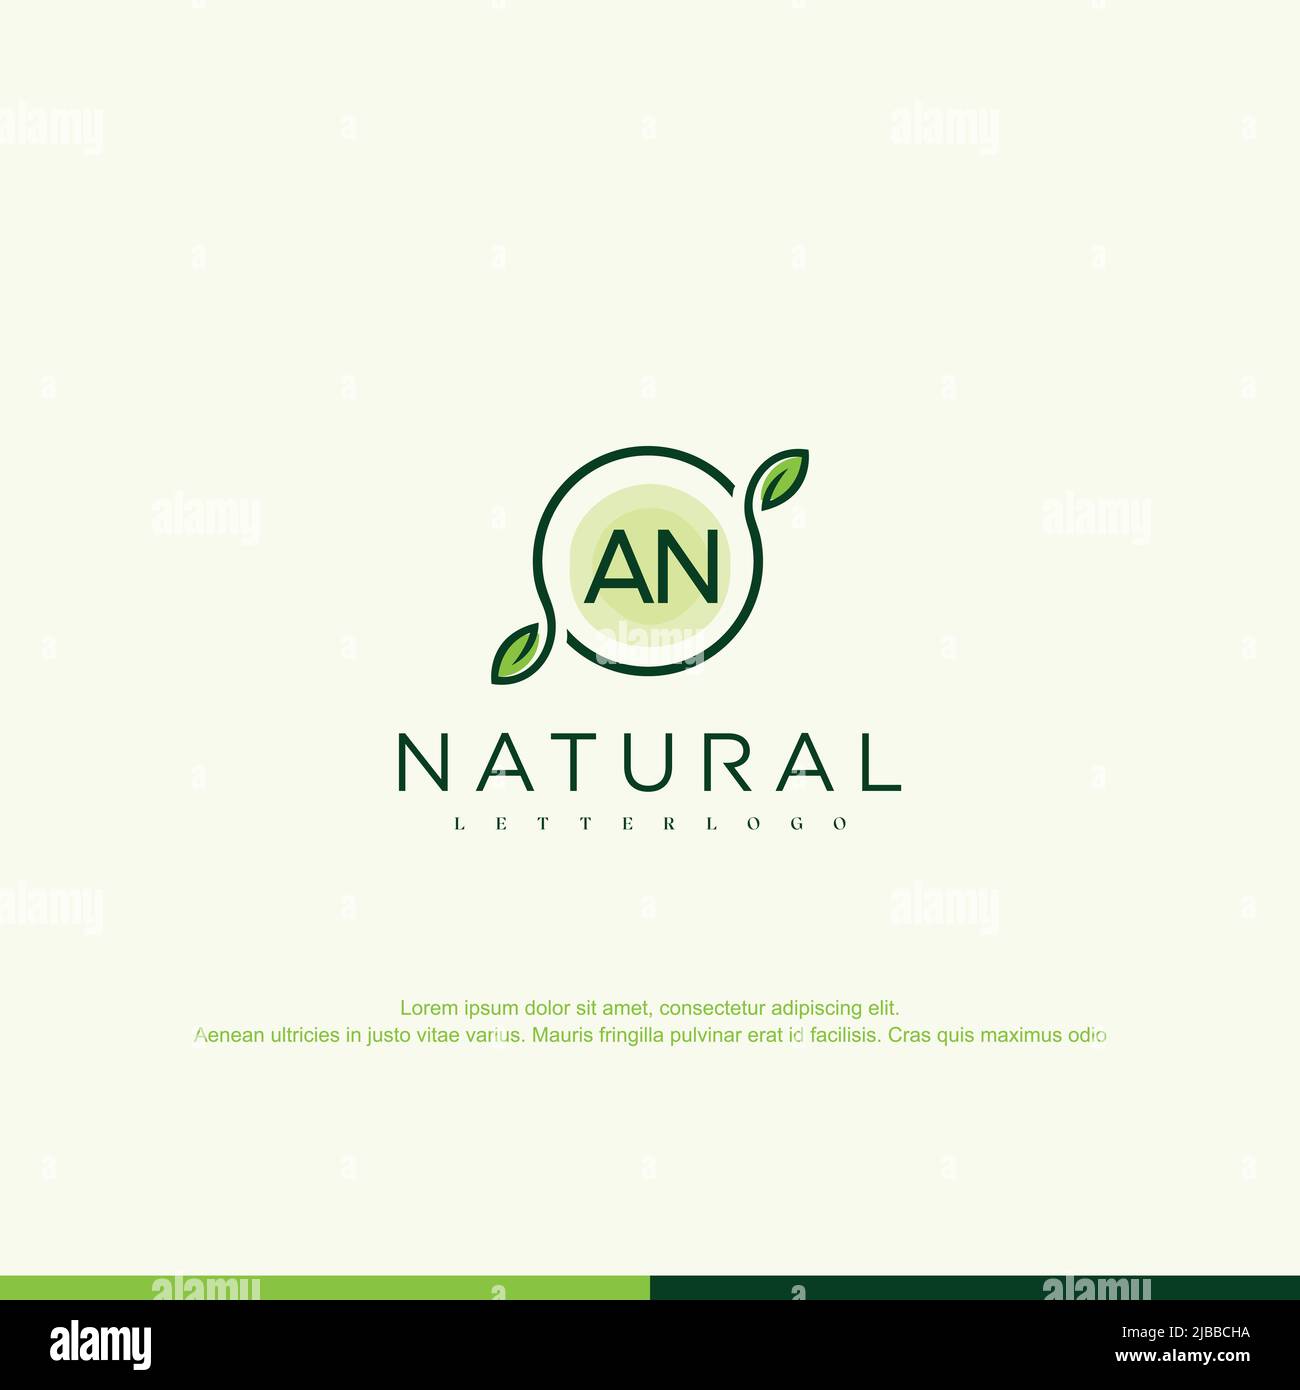 AN Initial natural logo template vector Stock Vector